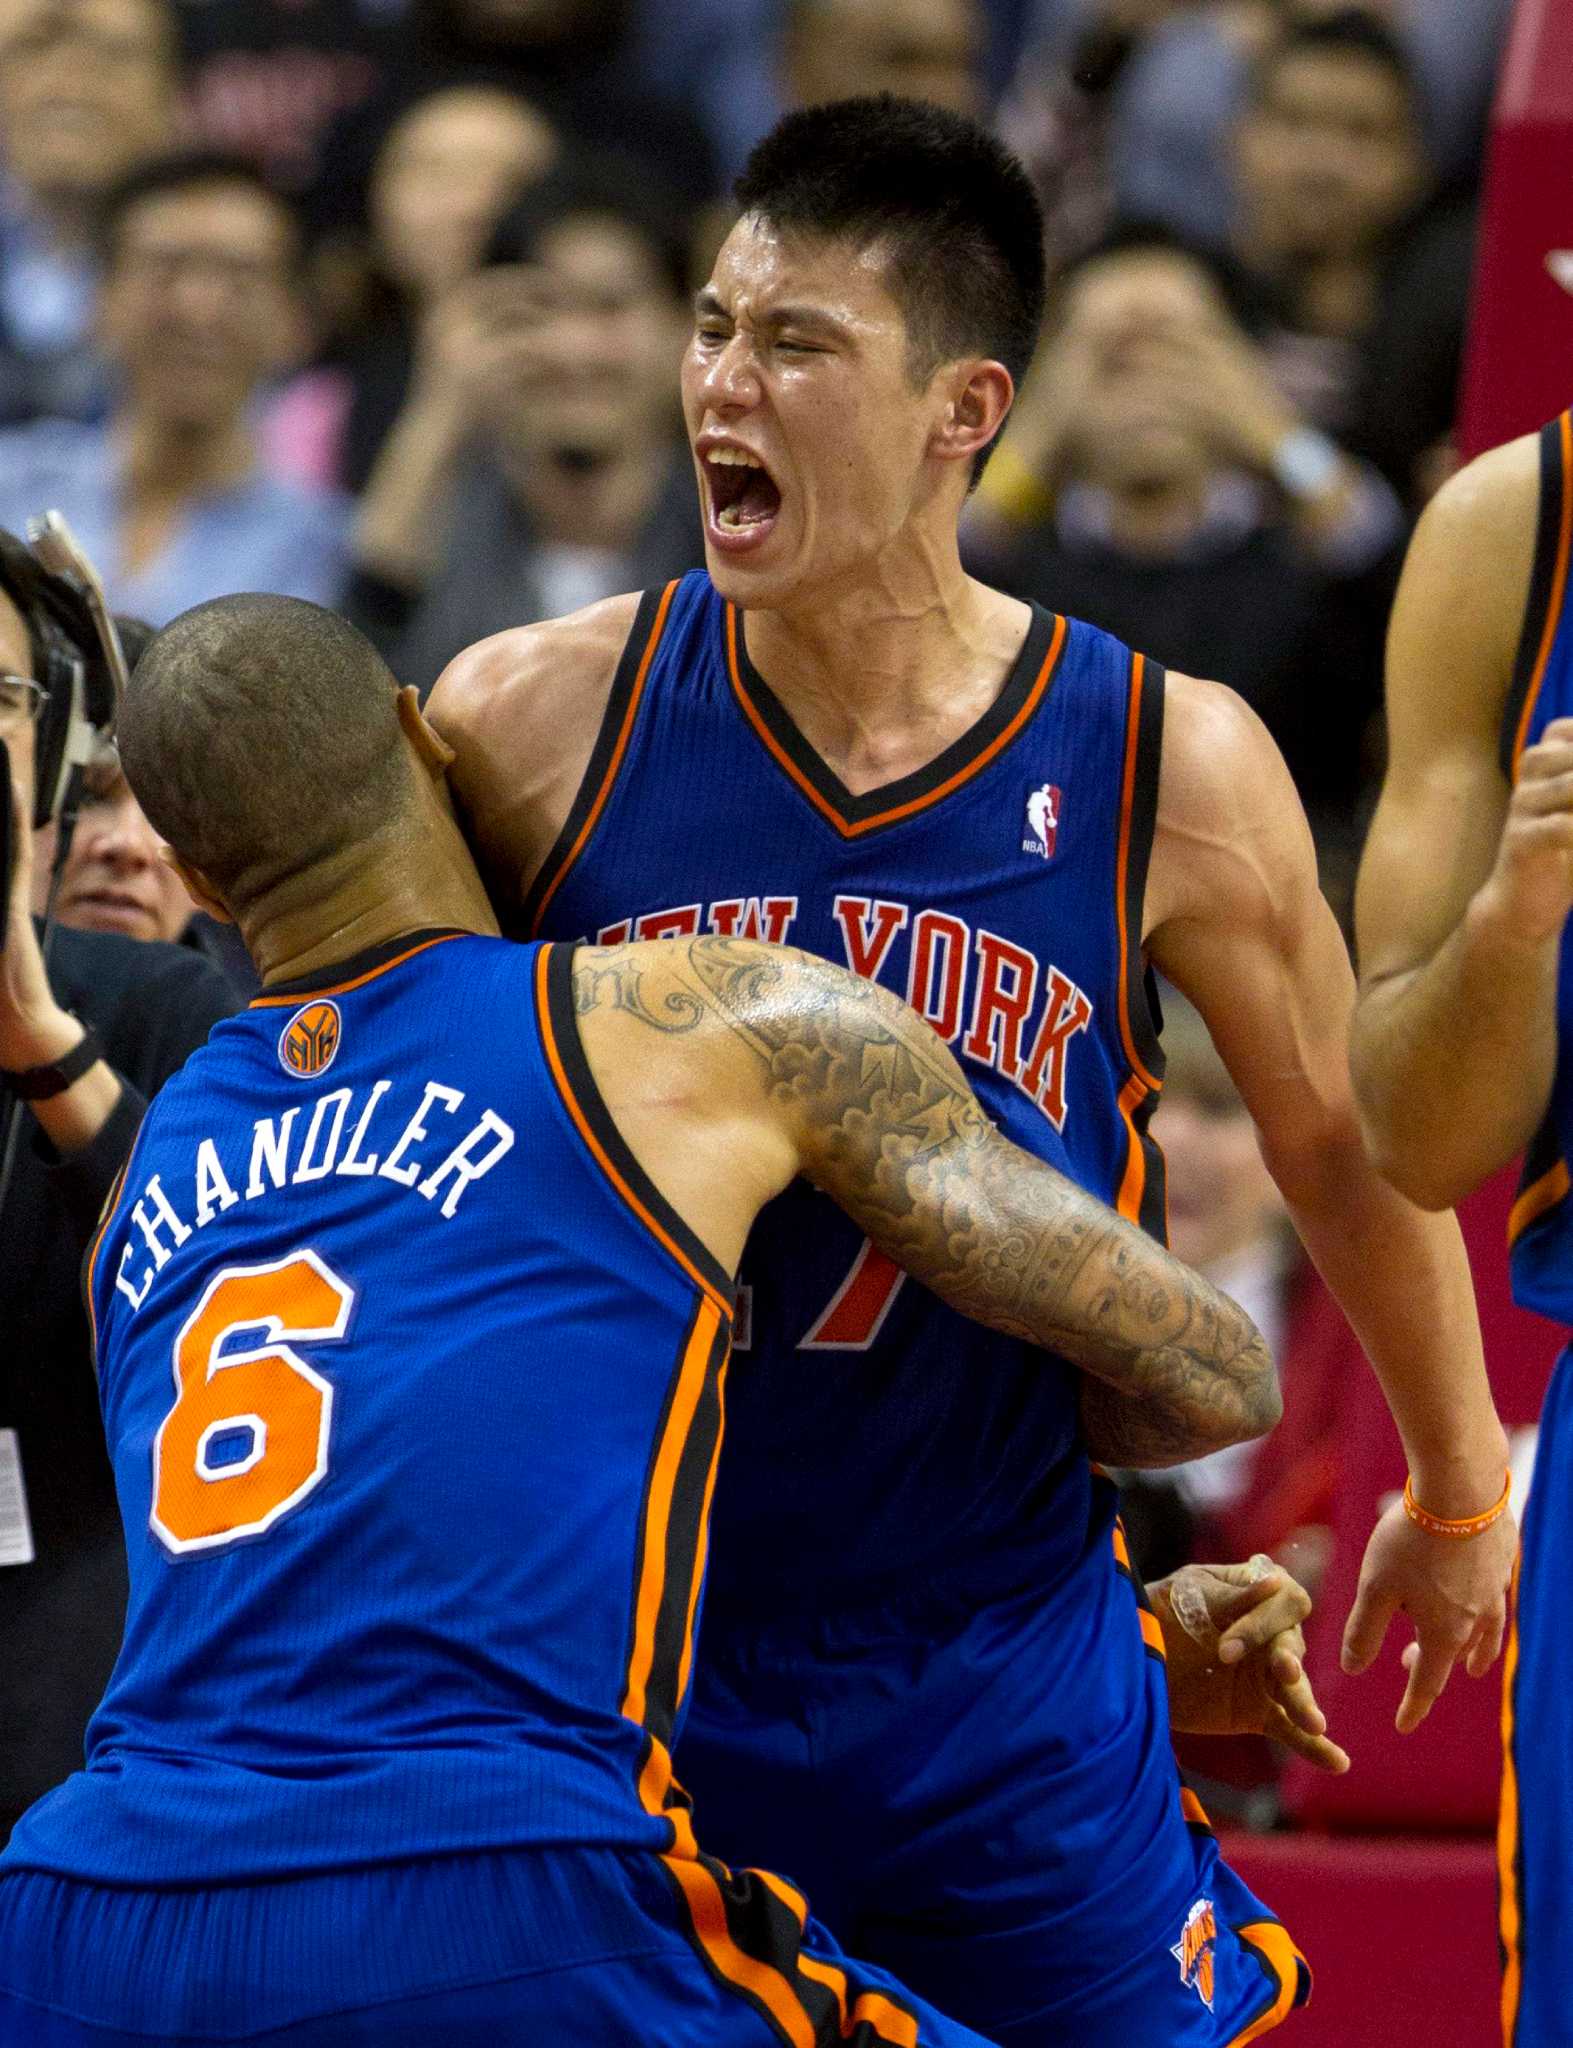 Game Used New York Knicks Salute To Service Shooting Shirt M Kemba Walker